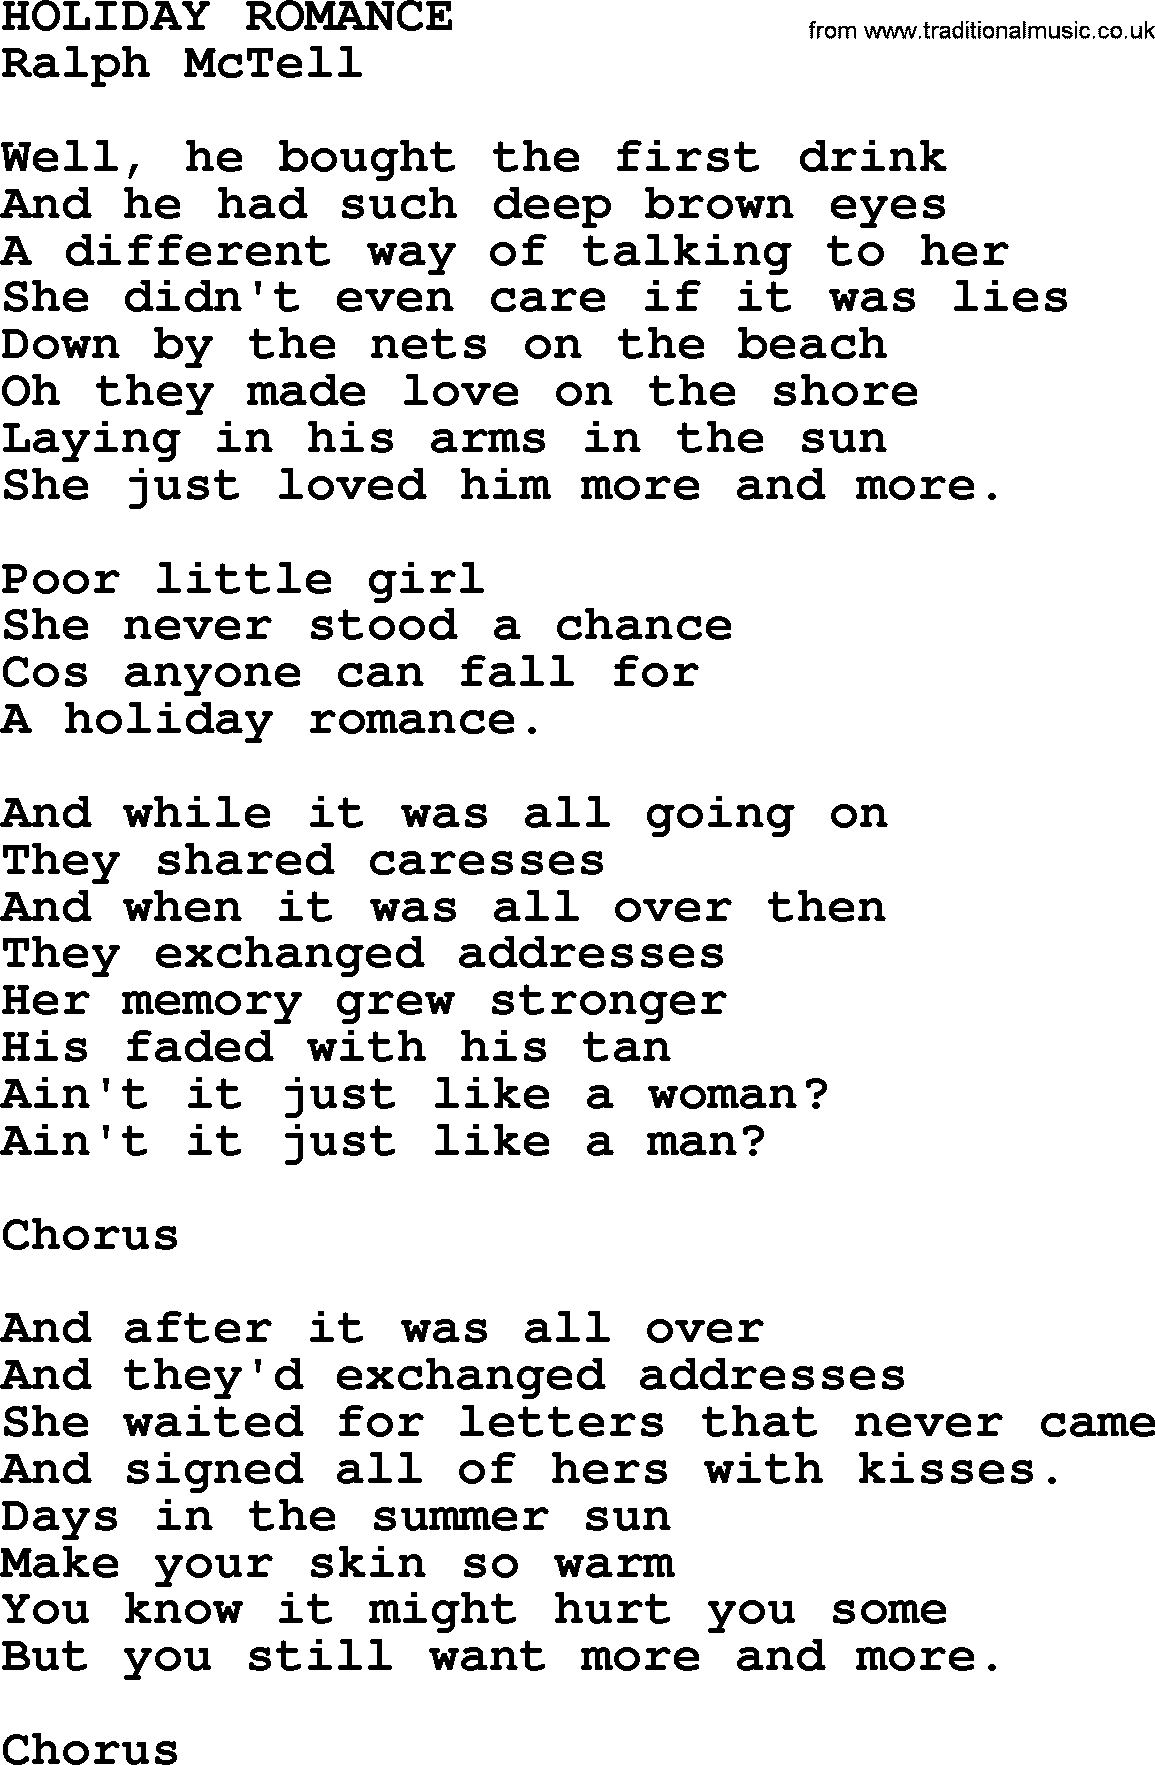 Ralph McTell Song: Holiday Romance, lyrics